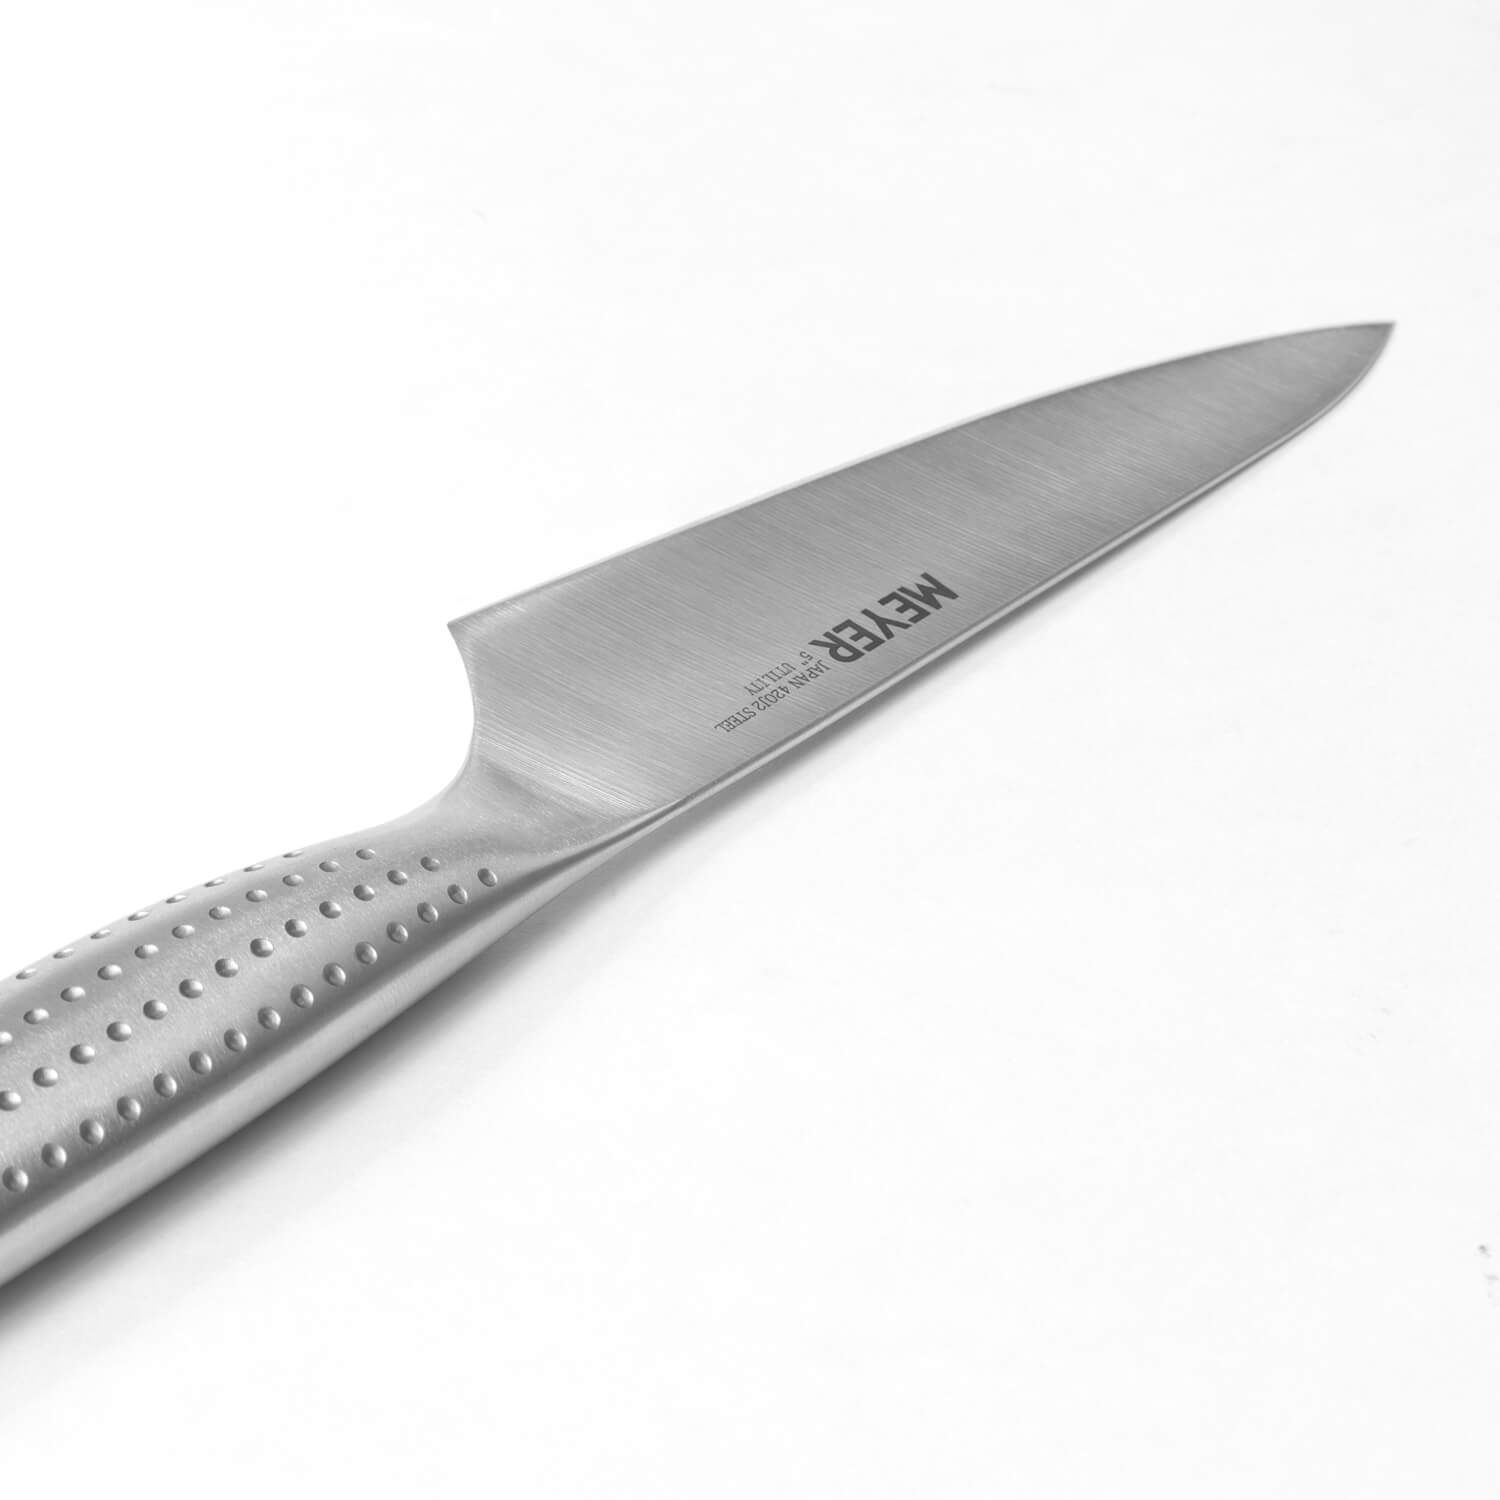 Meyer Stainless Steel Utility Knife, 12.5cm